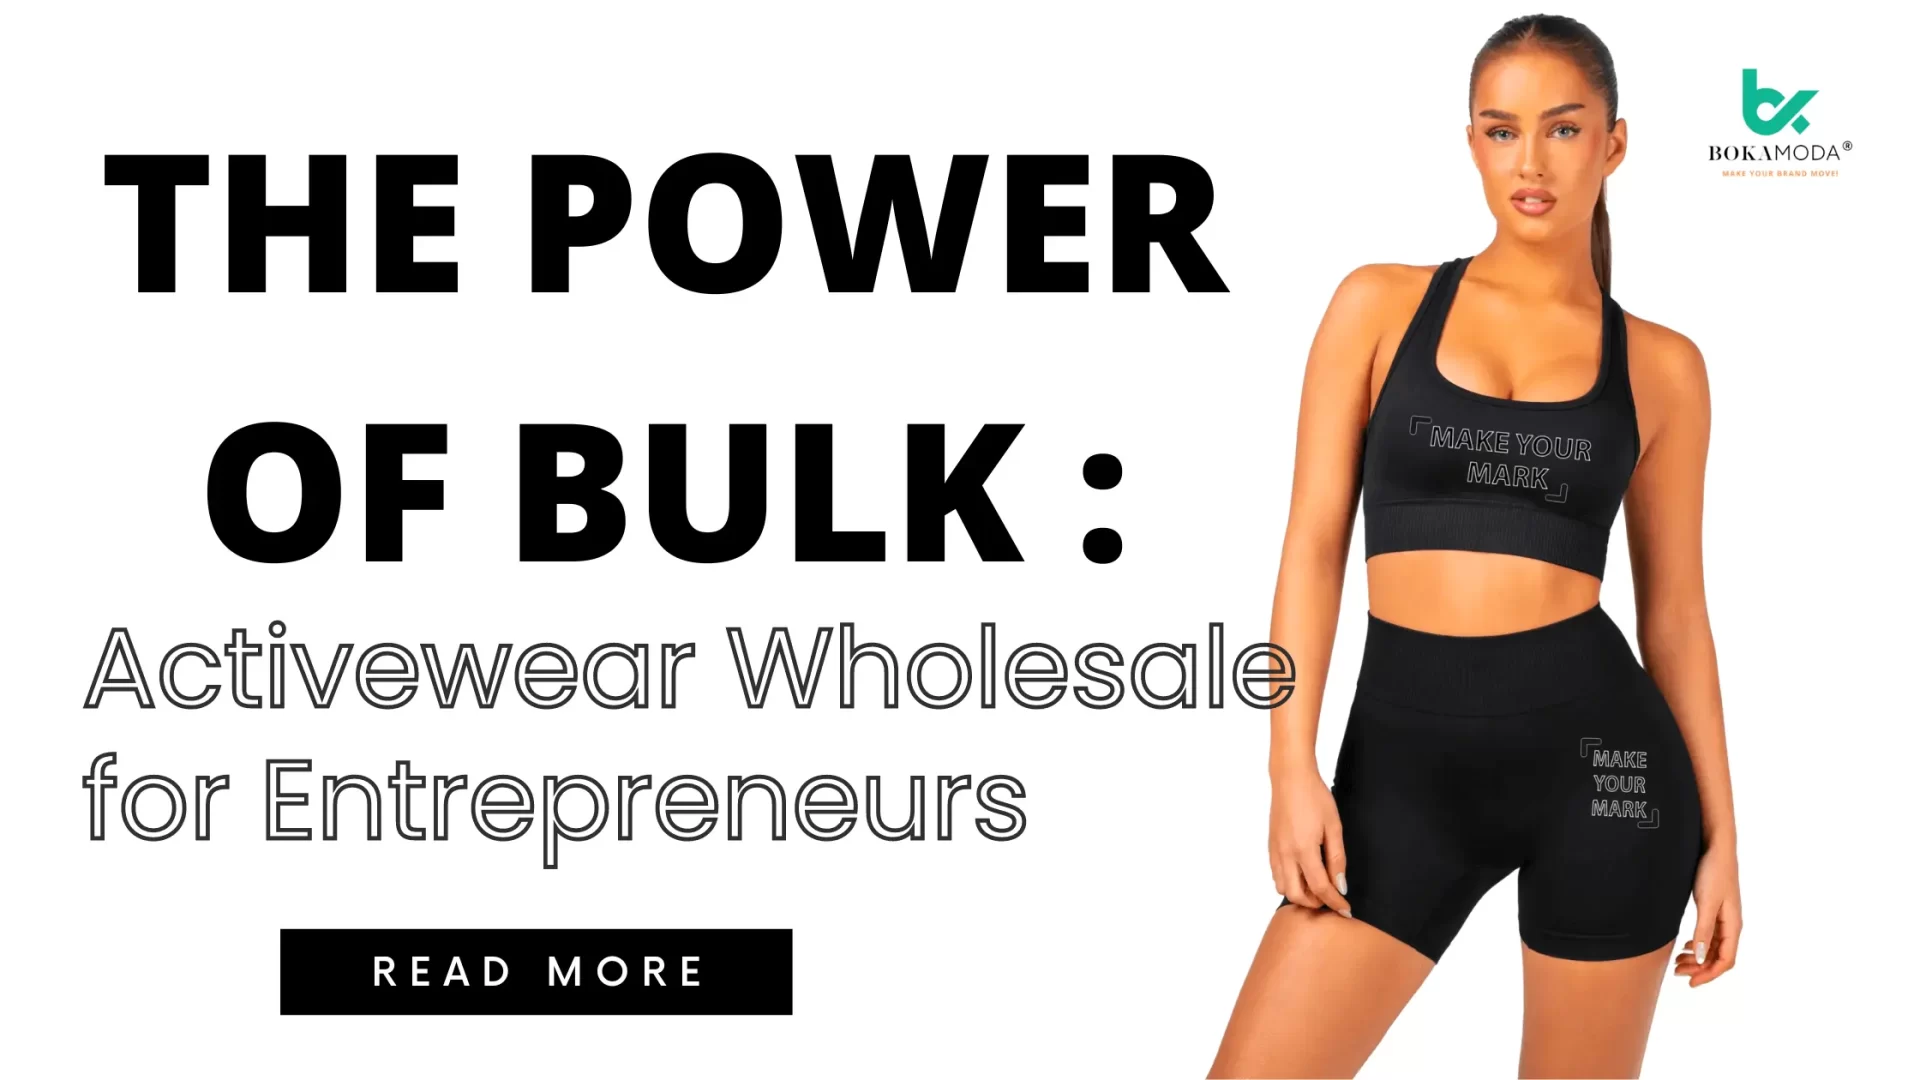 The Power of Bulk: Activewear Wholesale for Entrepreneurs